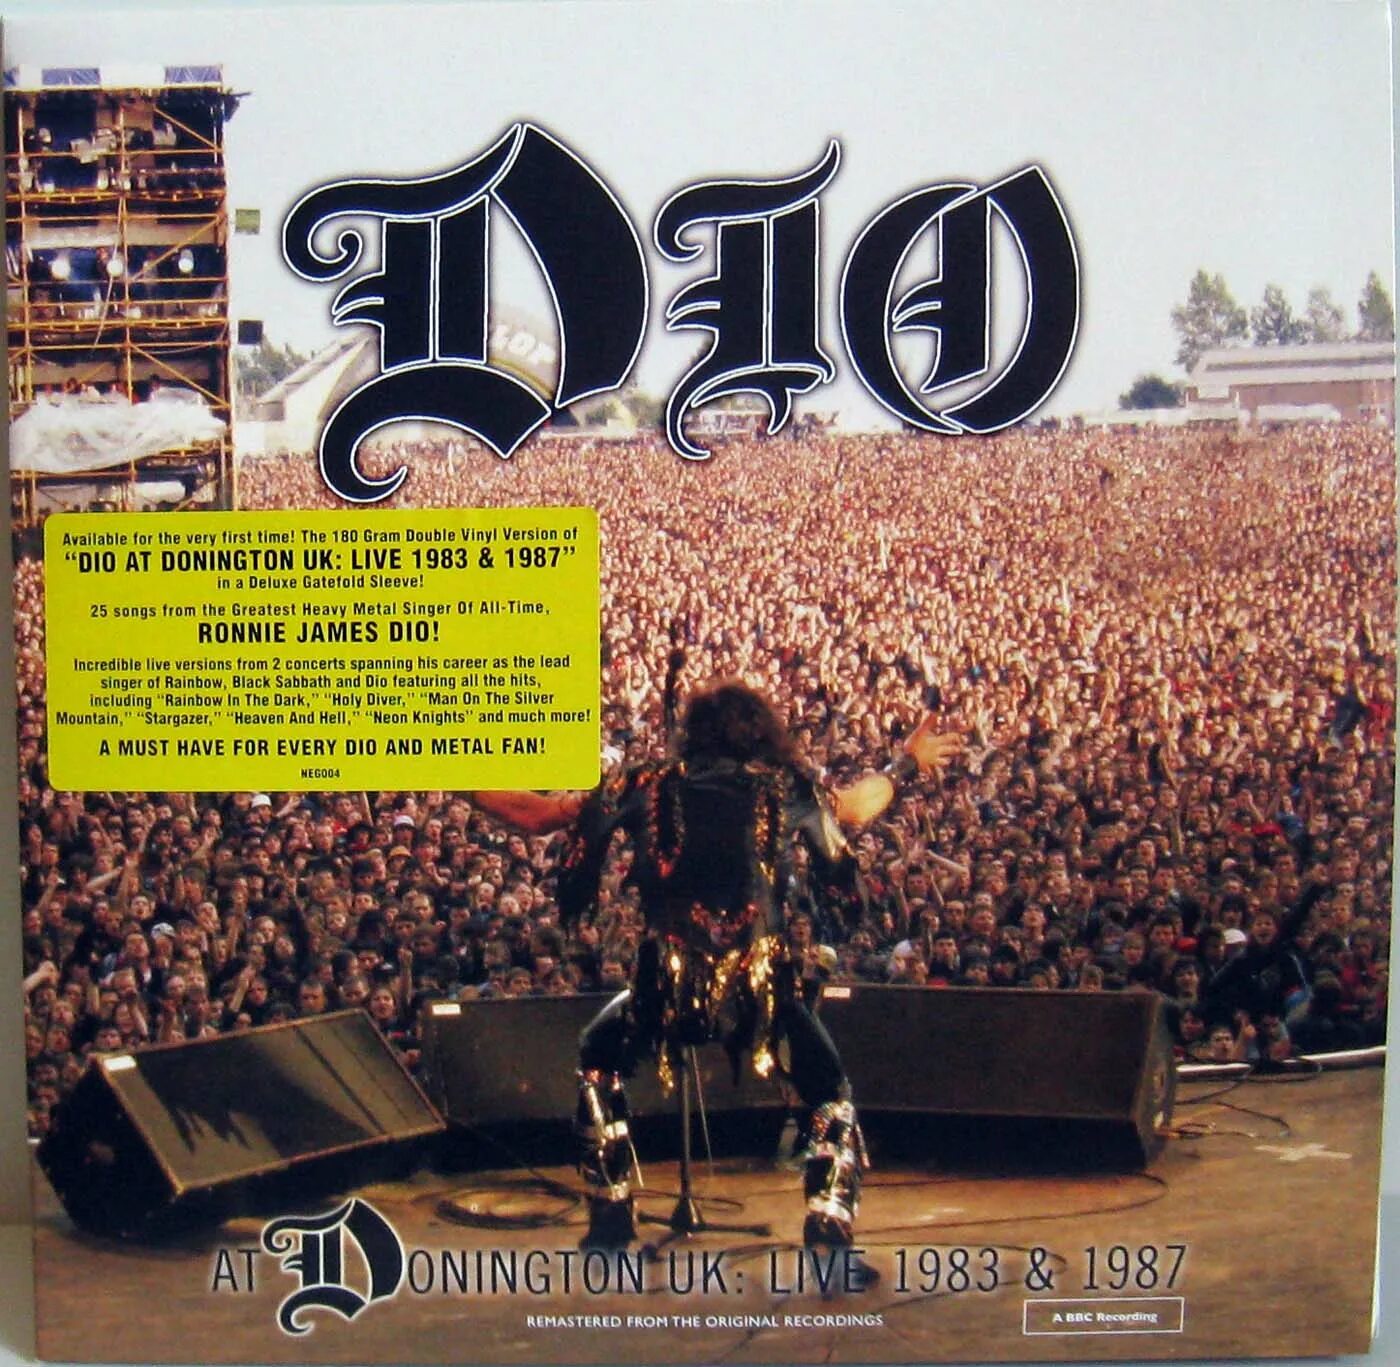 Dio live. Dio at Donington uk: Live 1983 & 1987. Dio Band 1987. Dio - at Donington uk Live 1983 & 1987, обложка альбома.